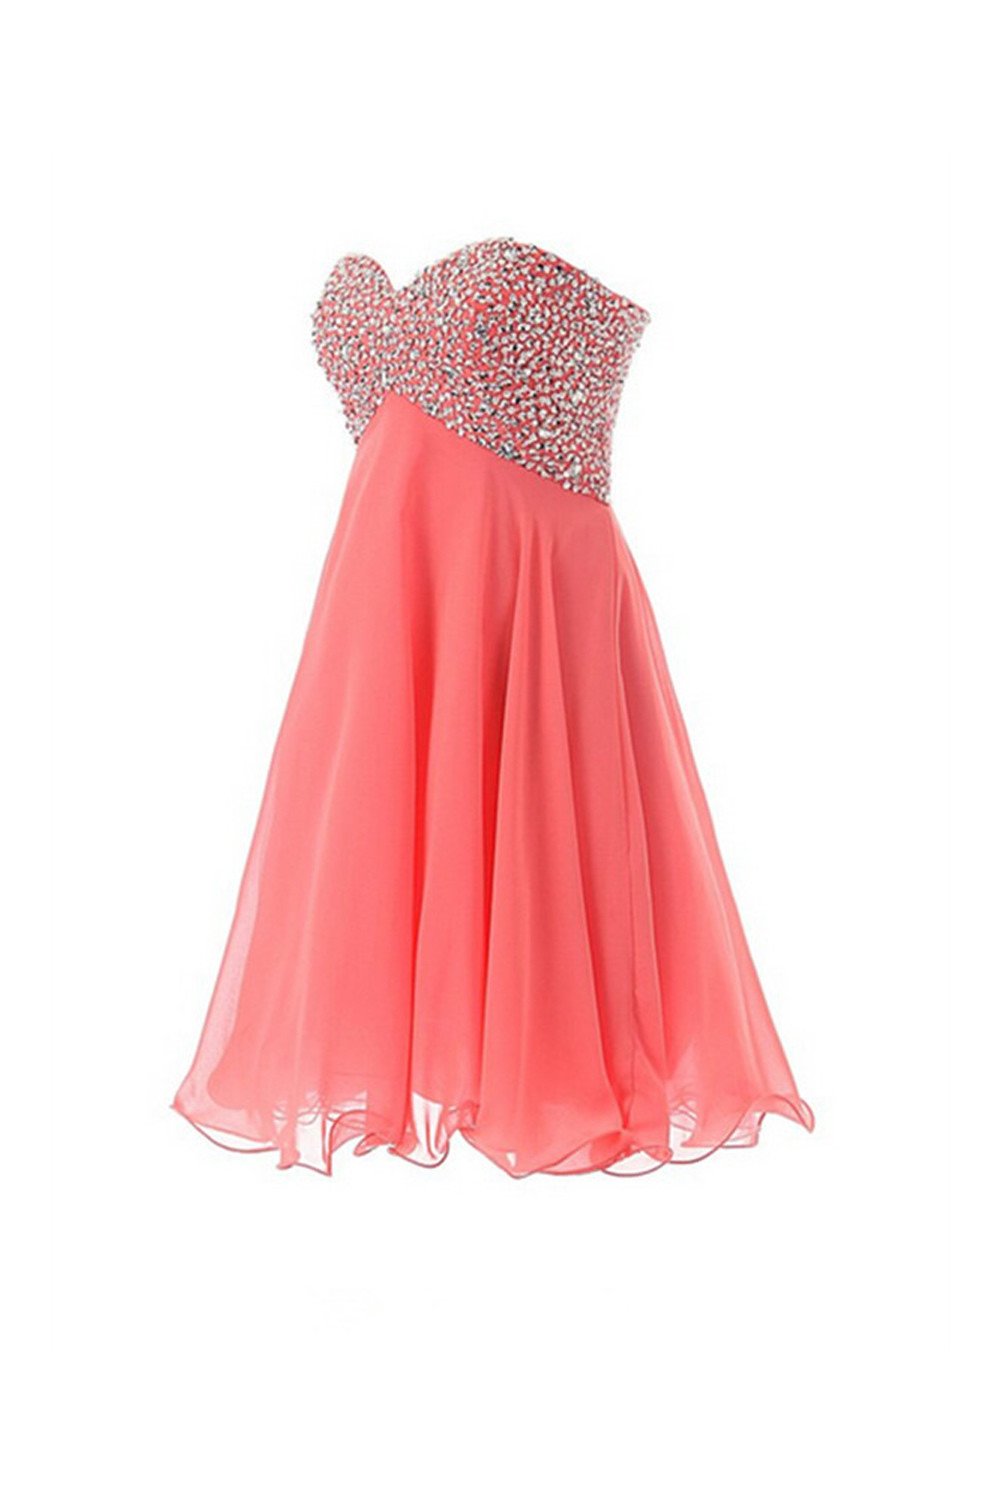 Empire Waist Watermelon Sweetheart Short Prom Homecoming Dress ED0673